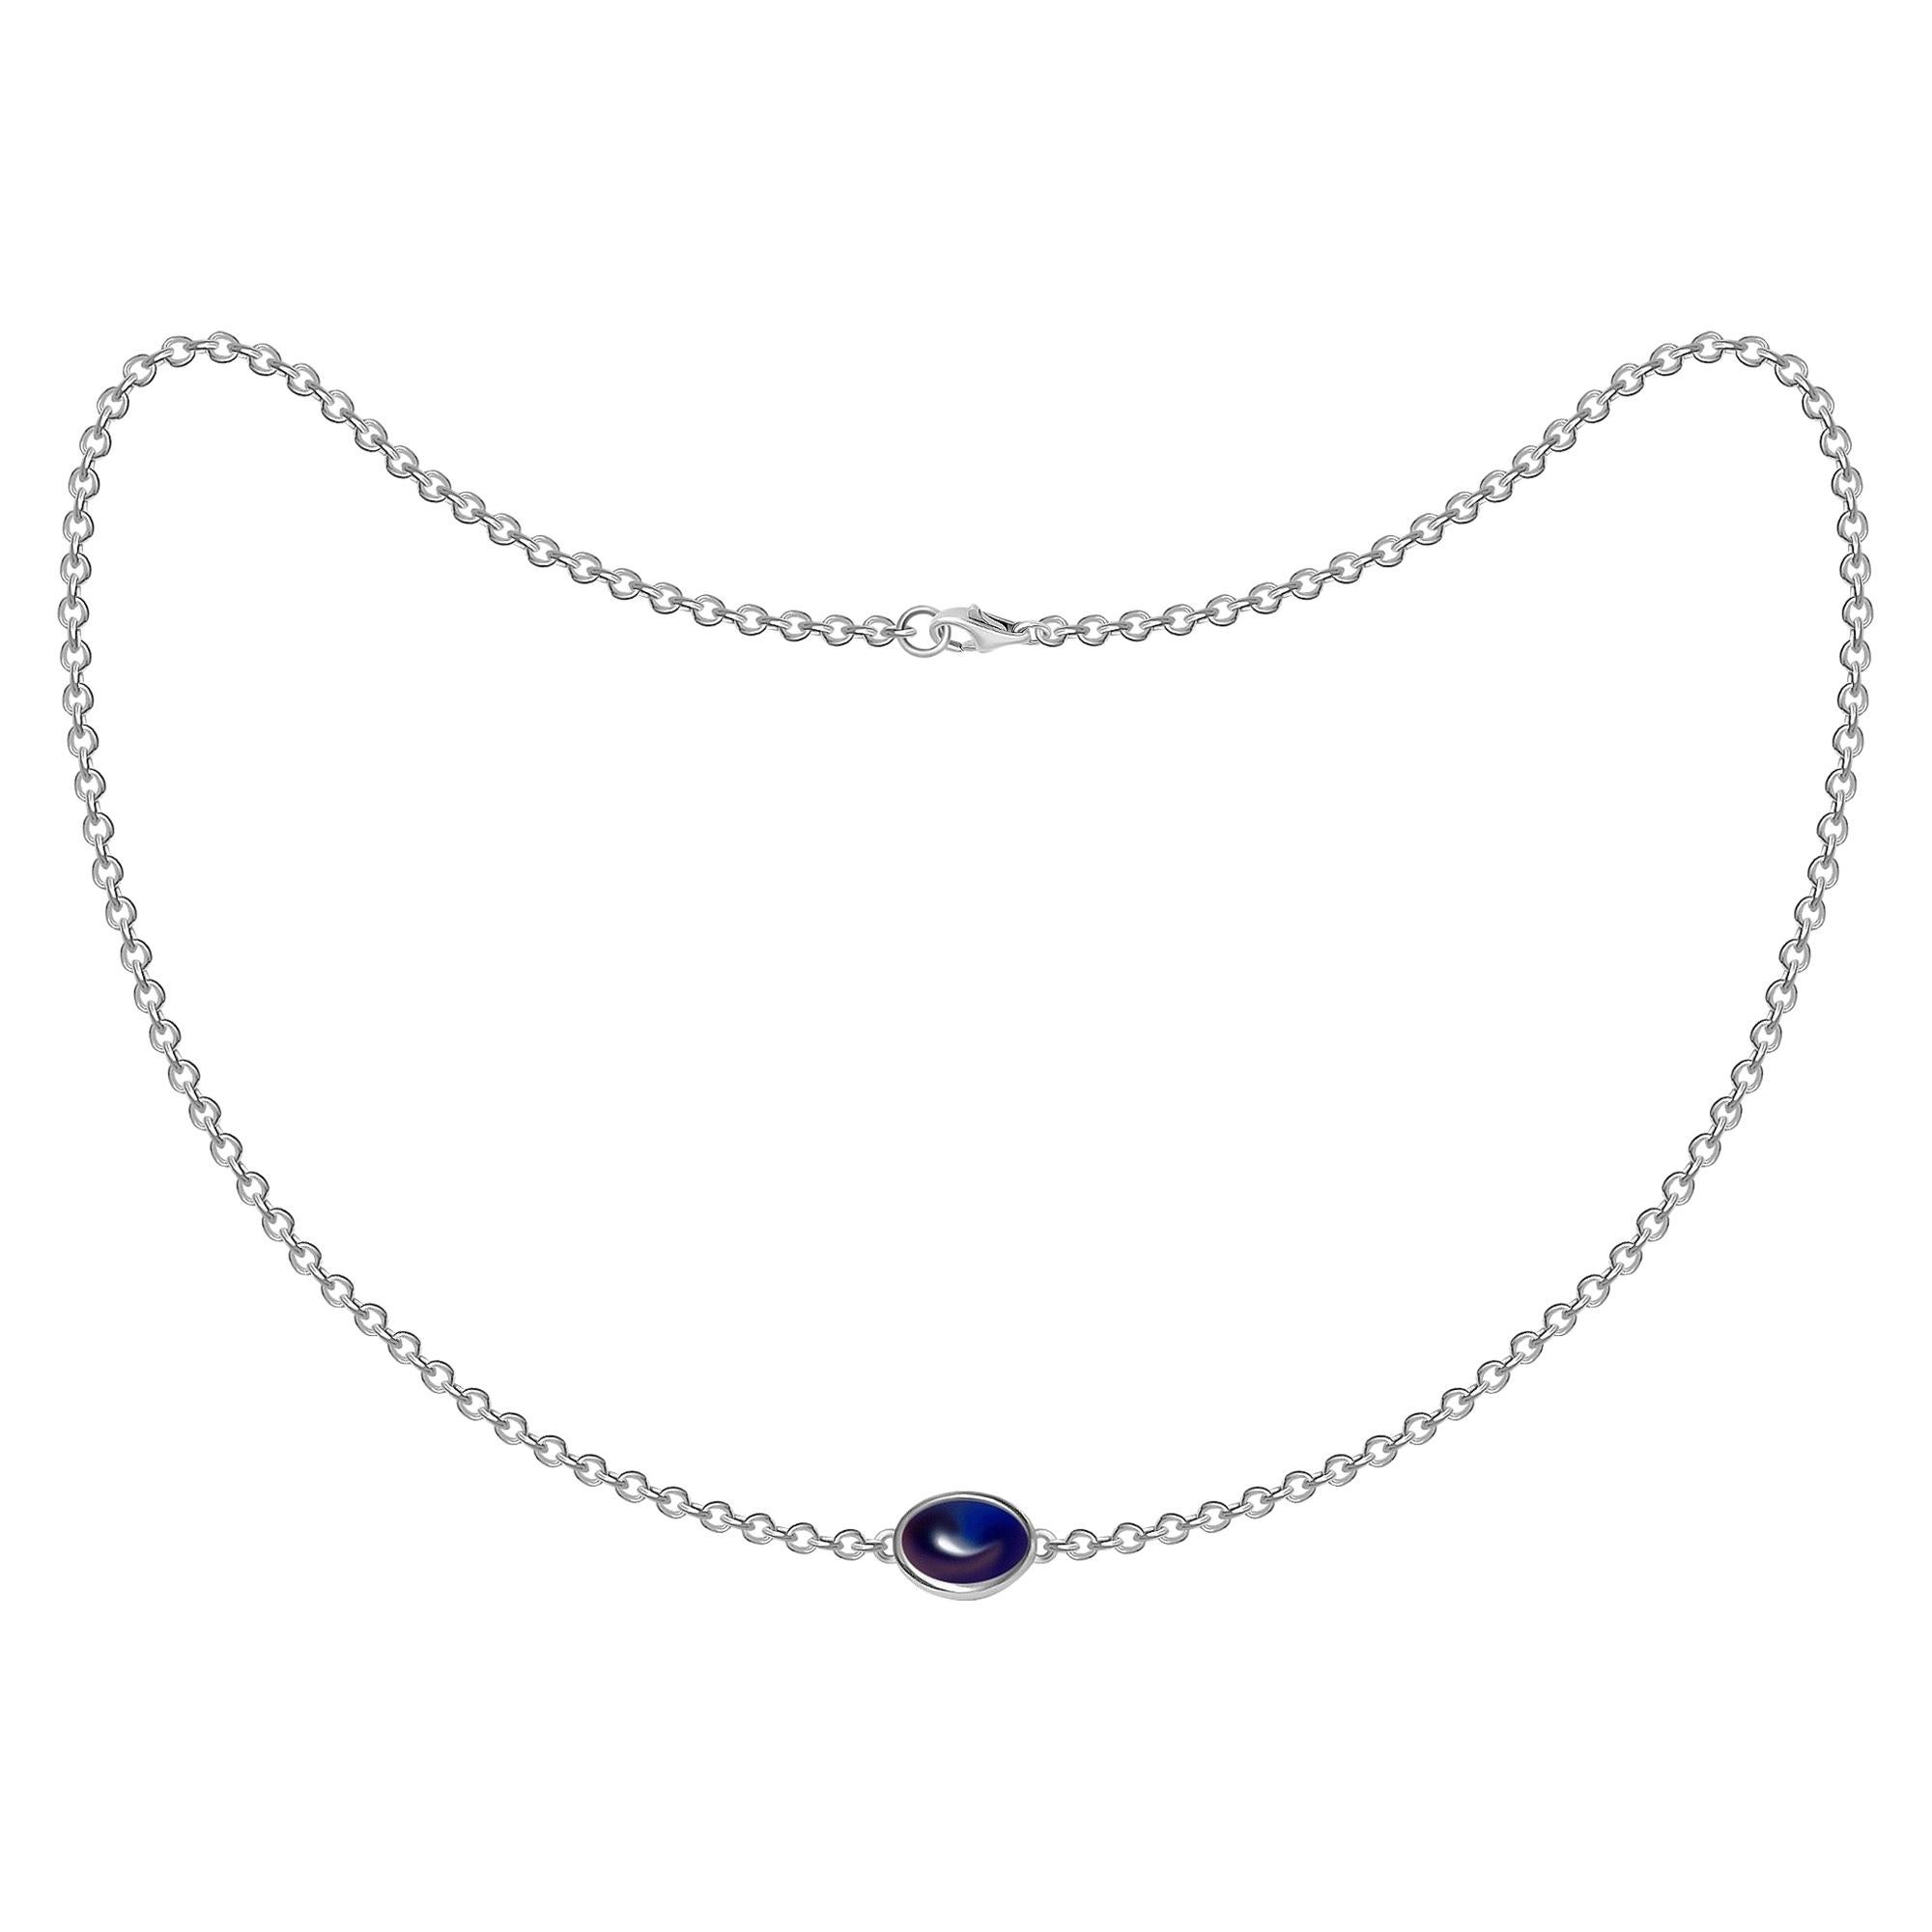 2 Carat Natural Blue Sapphire Cabochon 18 Karat White Gold Chain Necklace